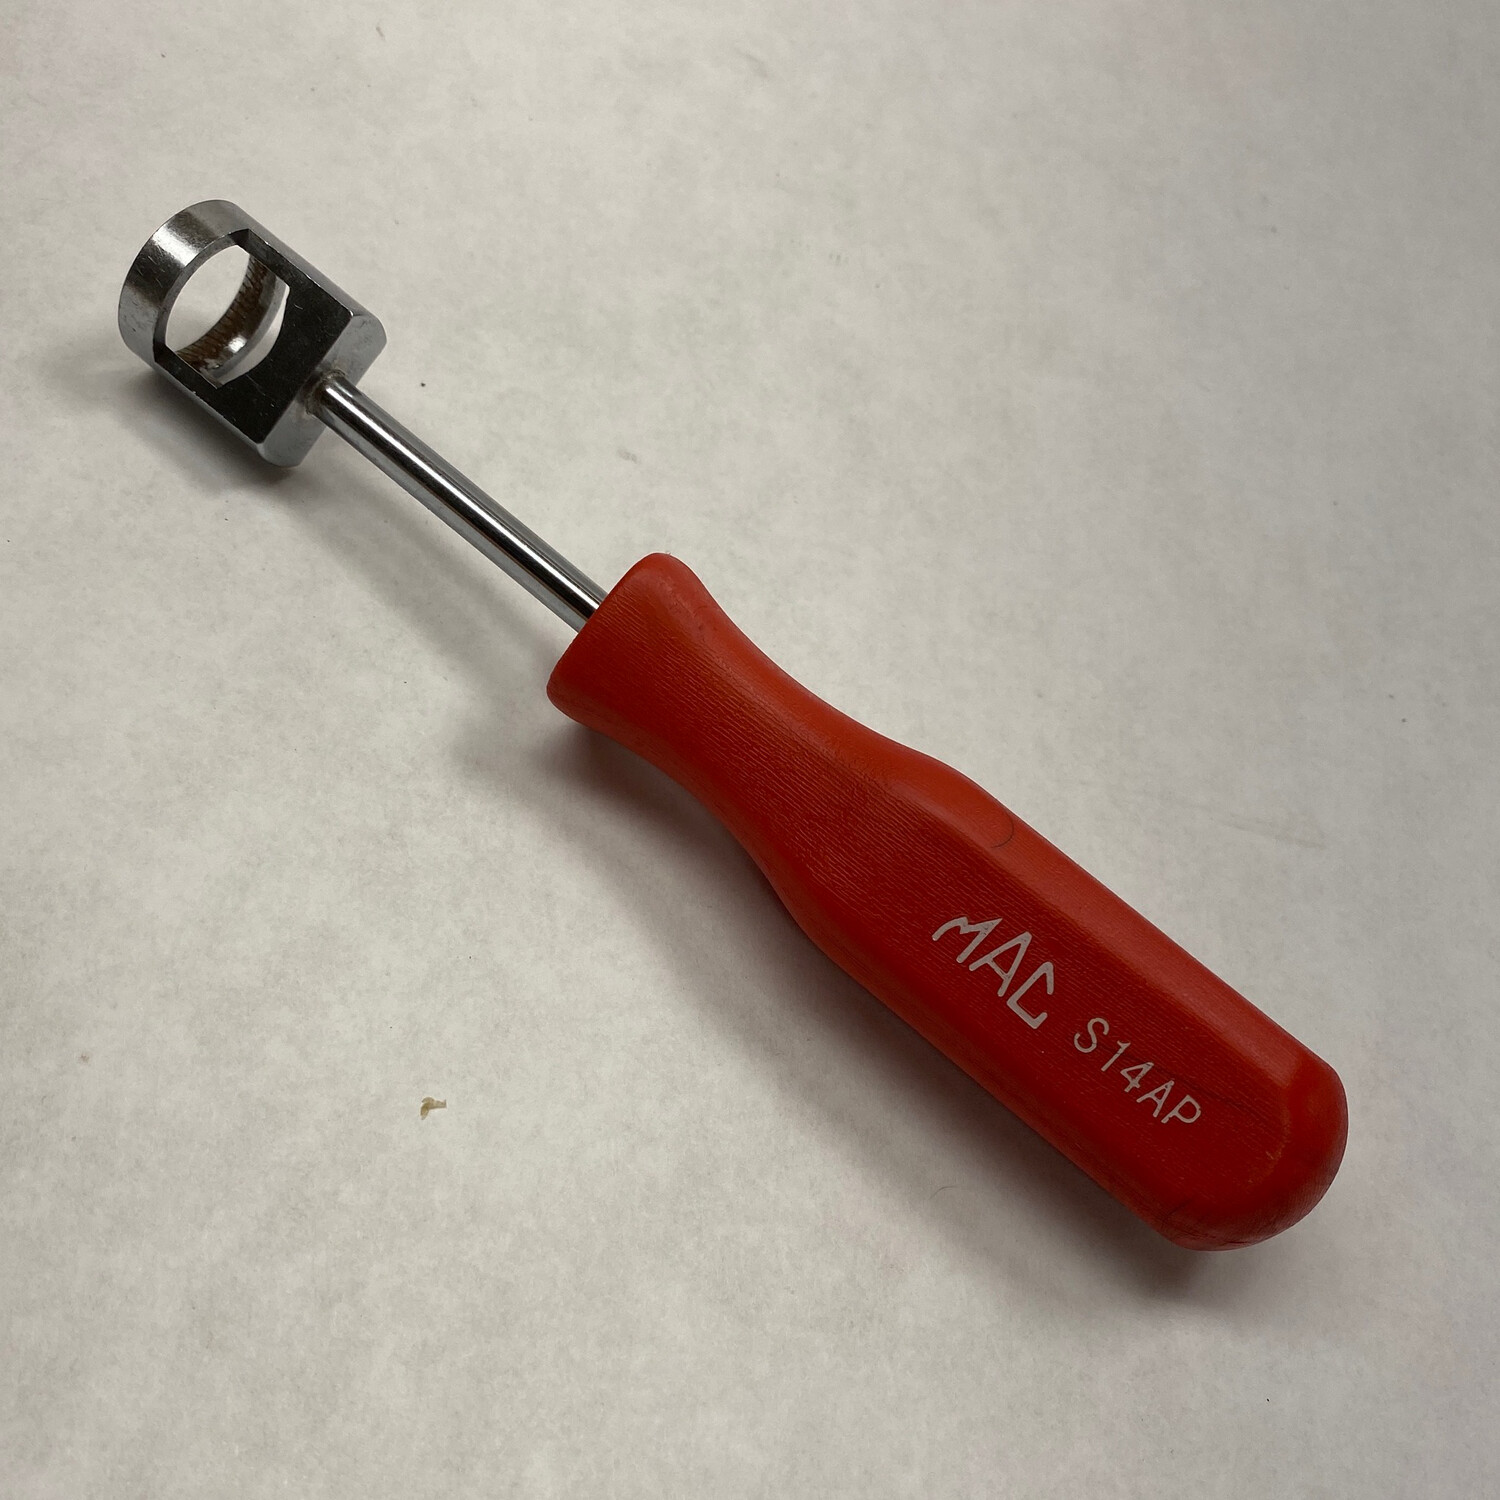 Mac Tools Brake Retainer Spring Tool, S14AP